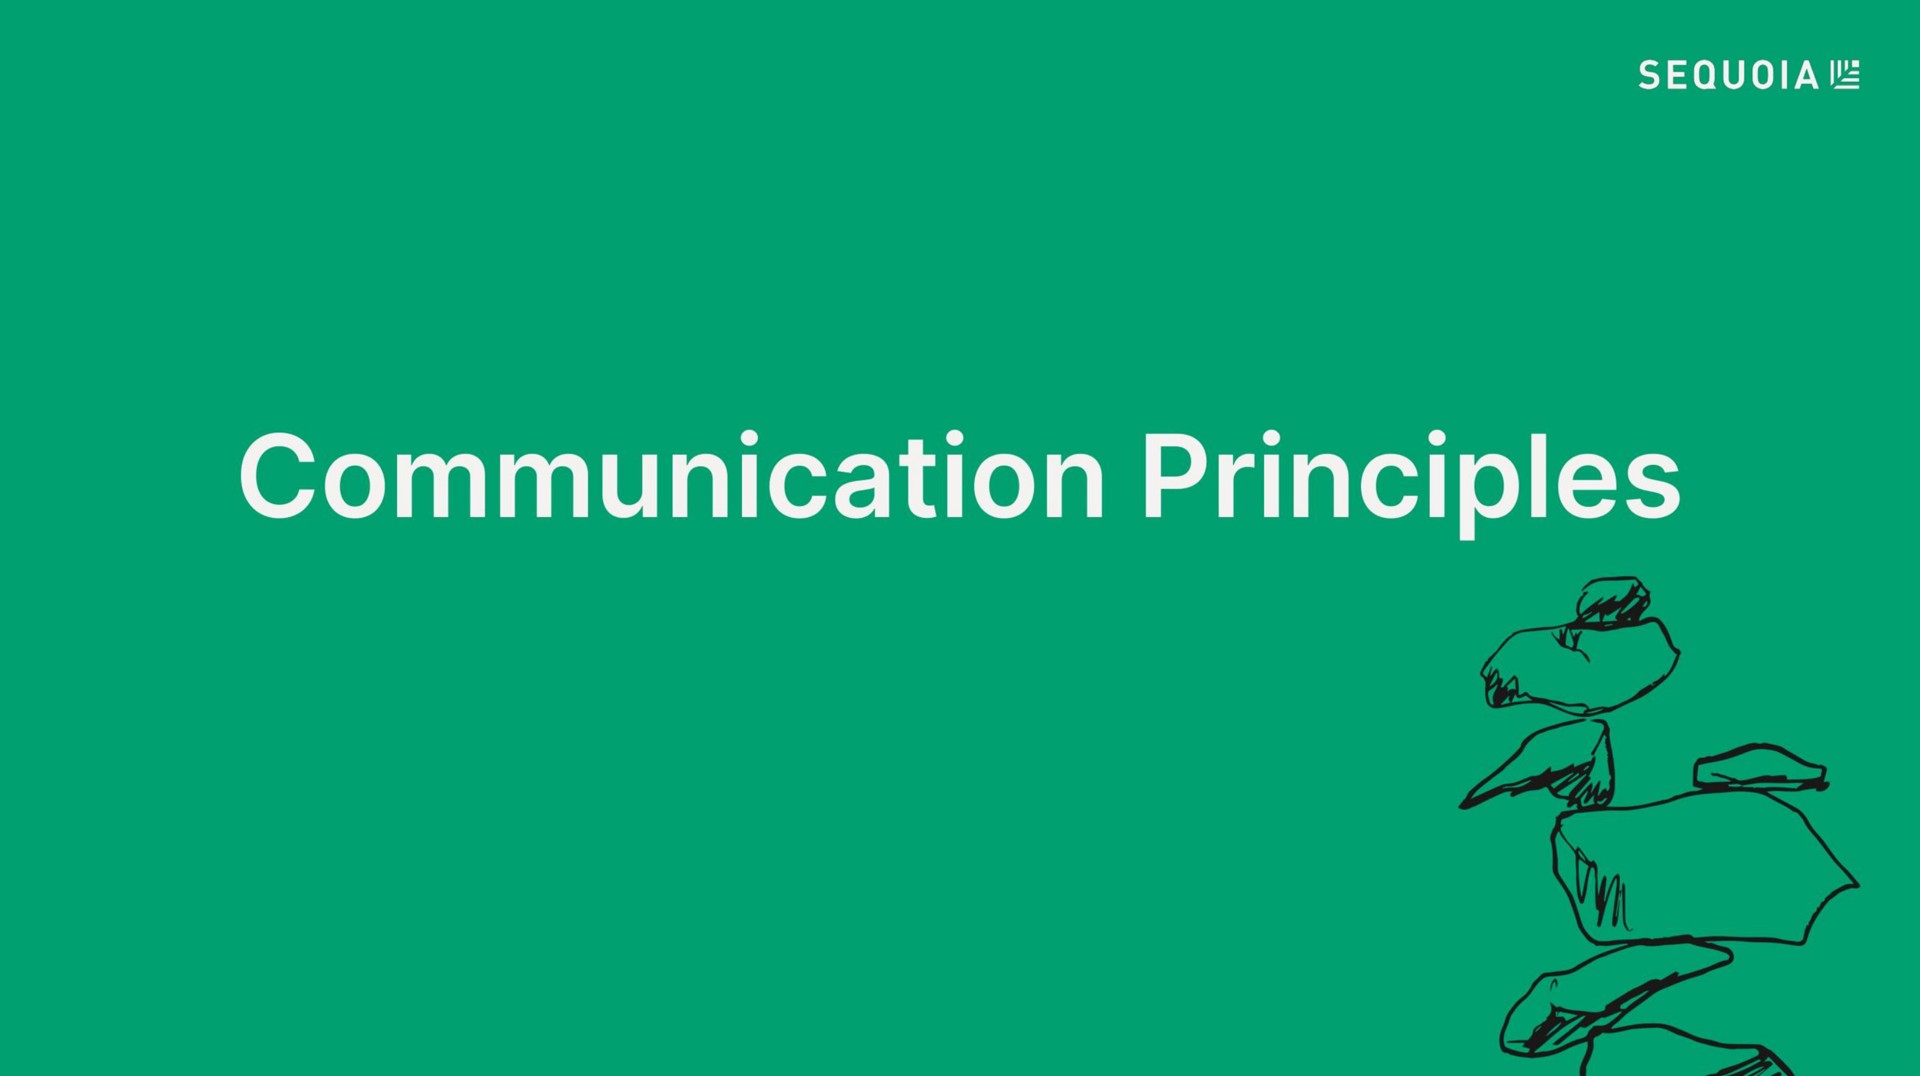 communication principles | Sequoia Capital